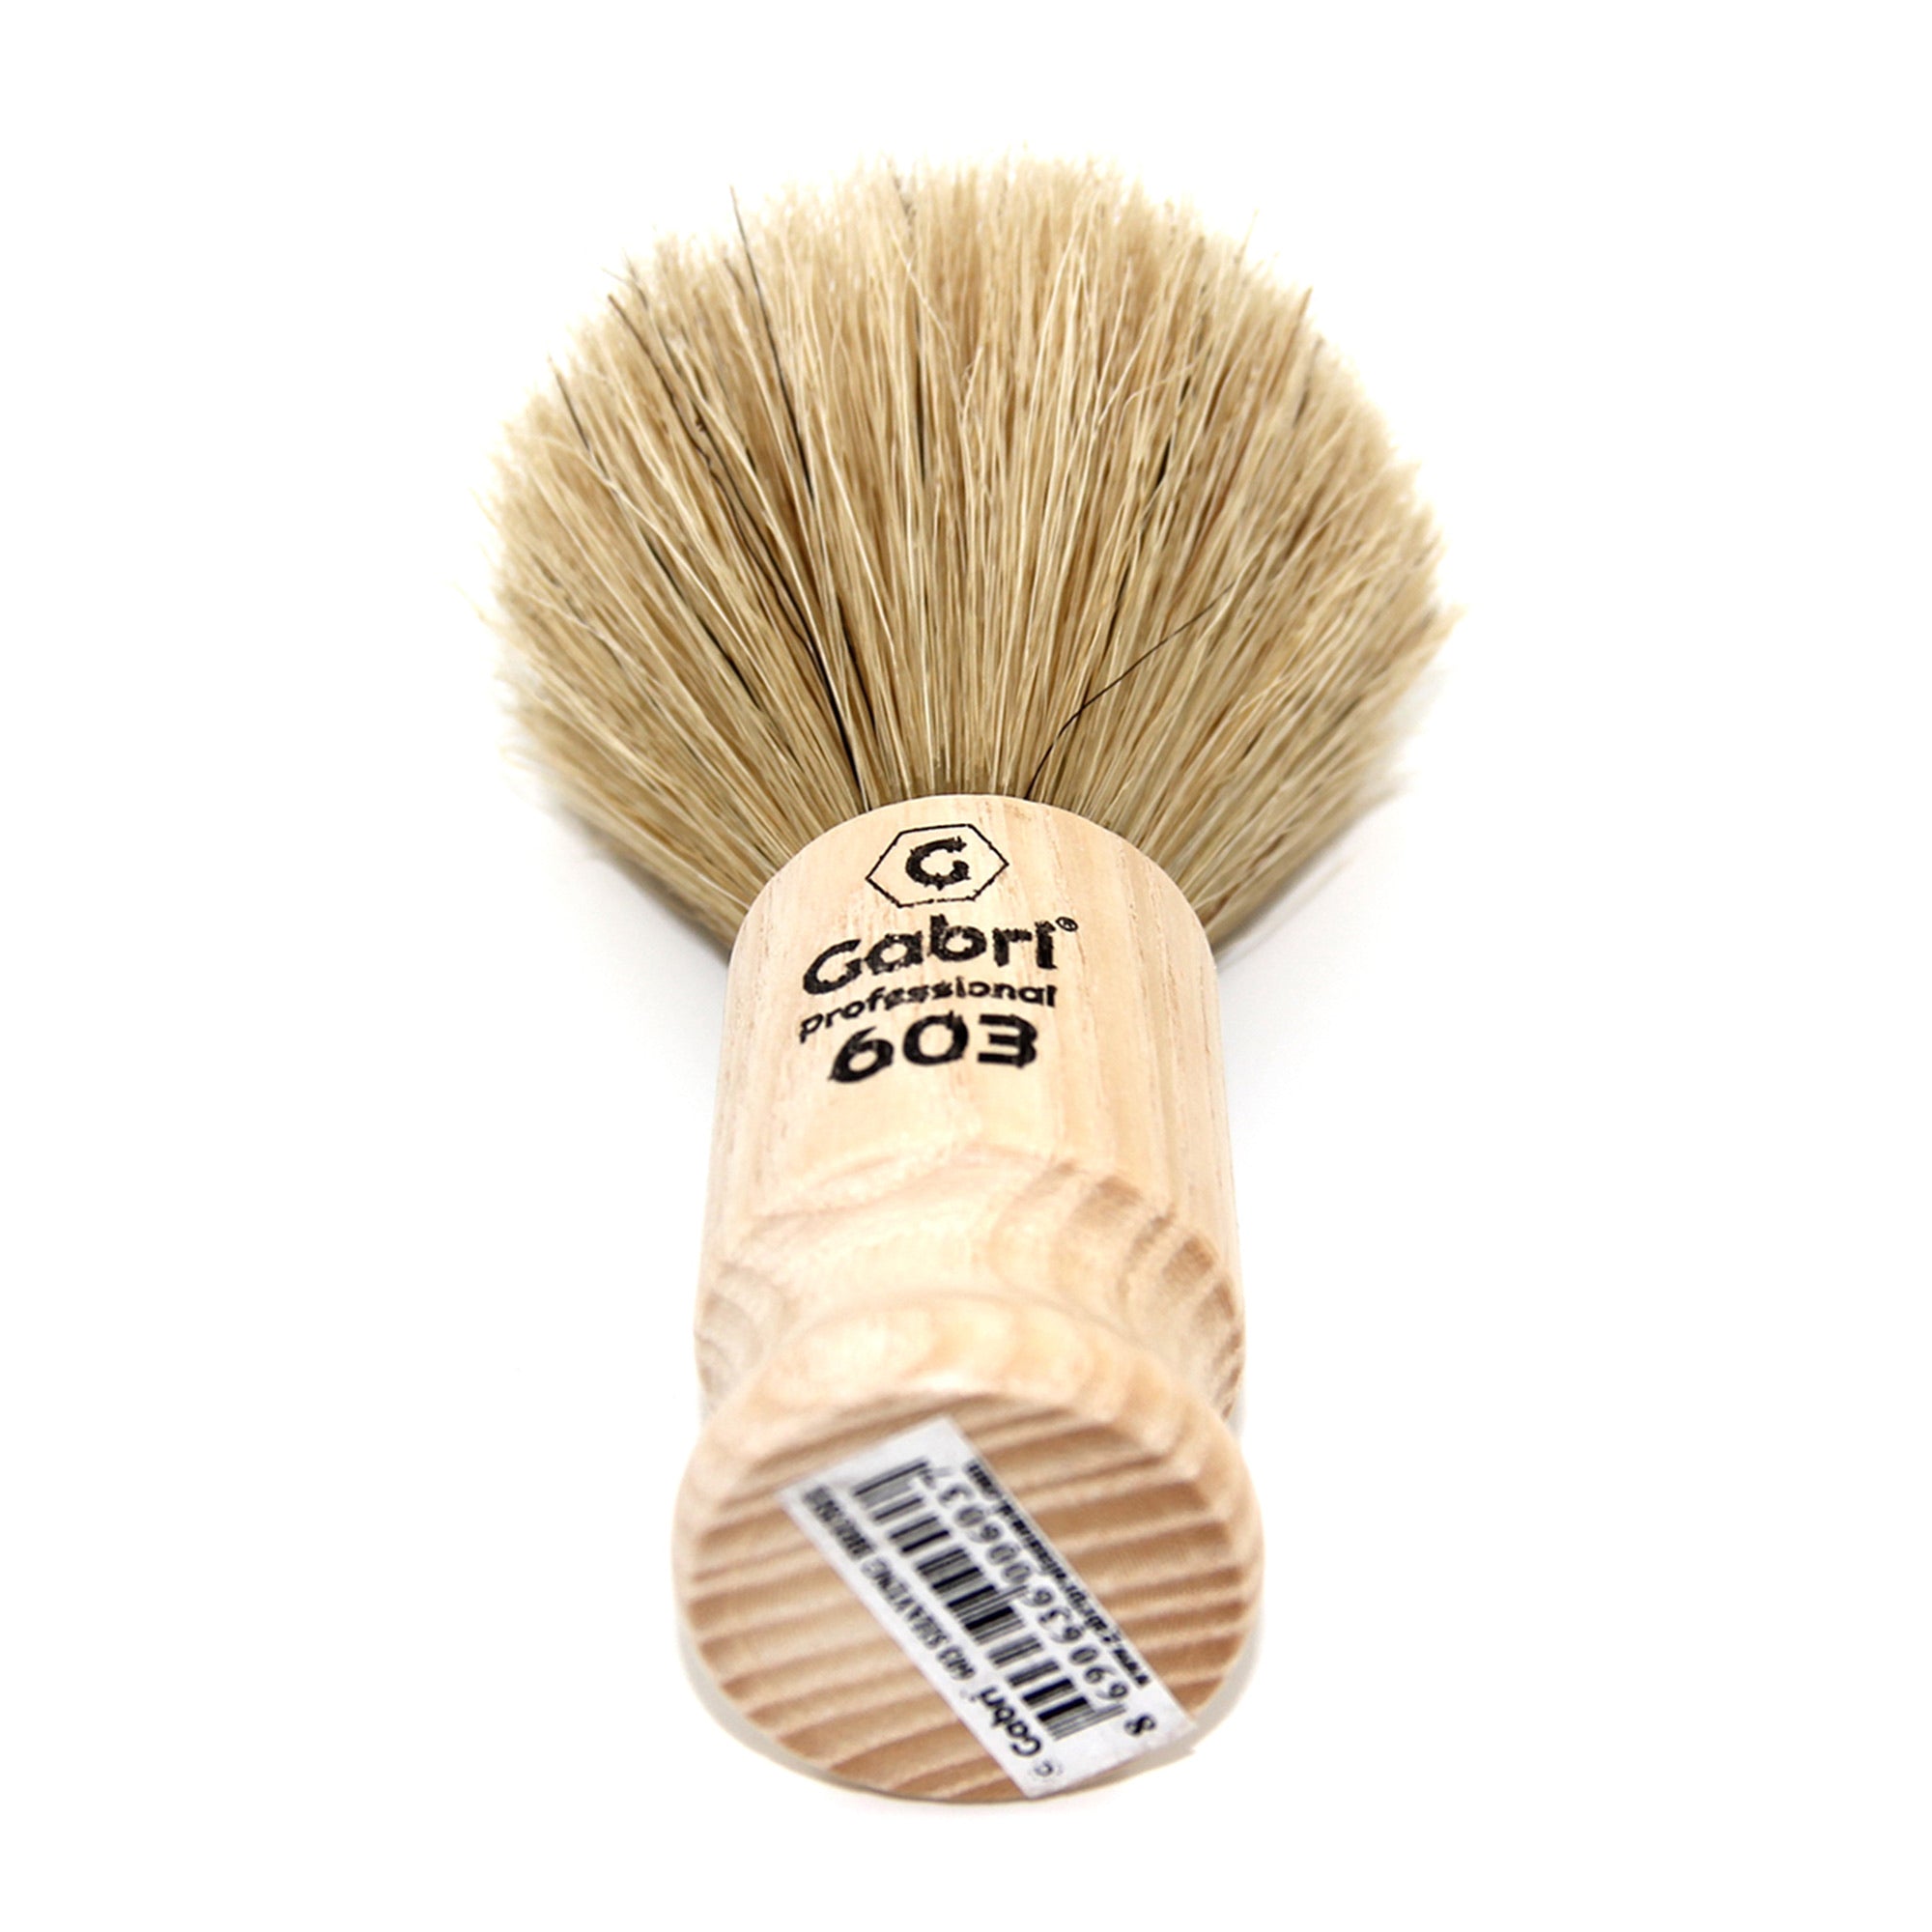 Gabri - Shaving Brush Wooden Handle 603 10cm